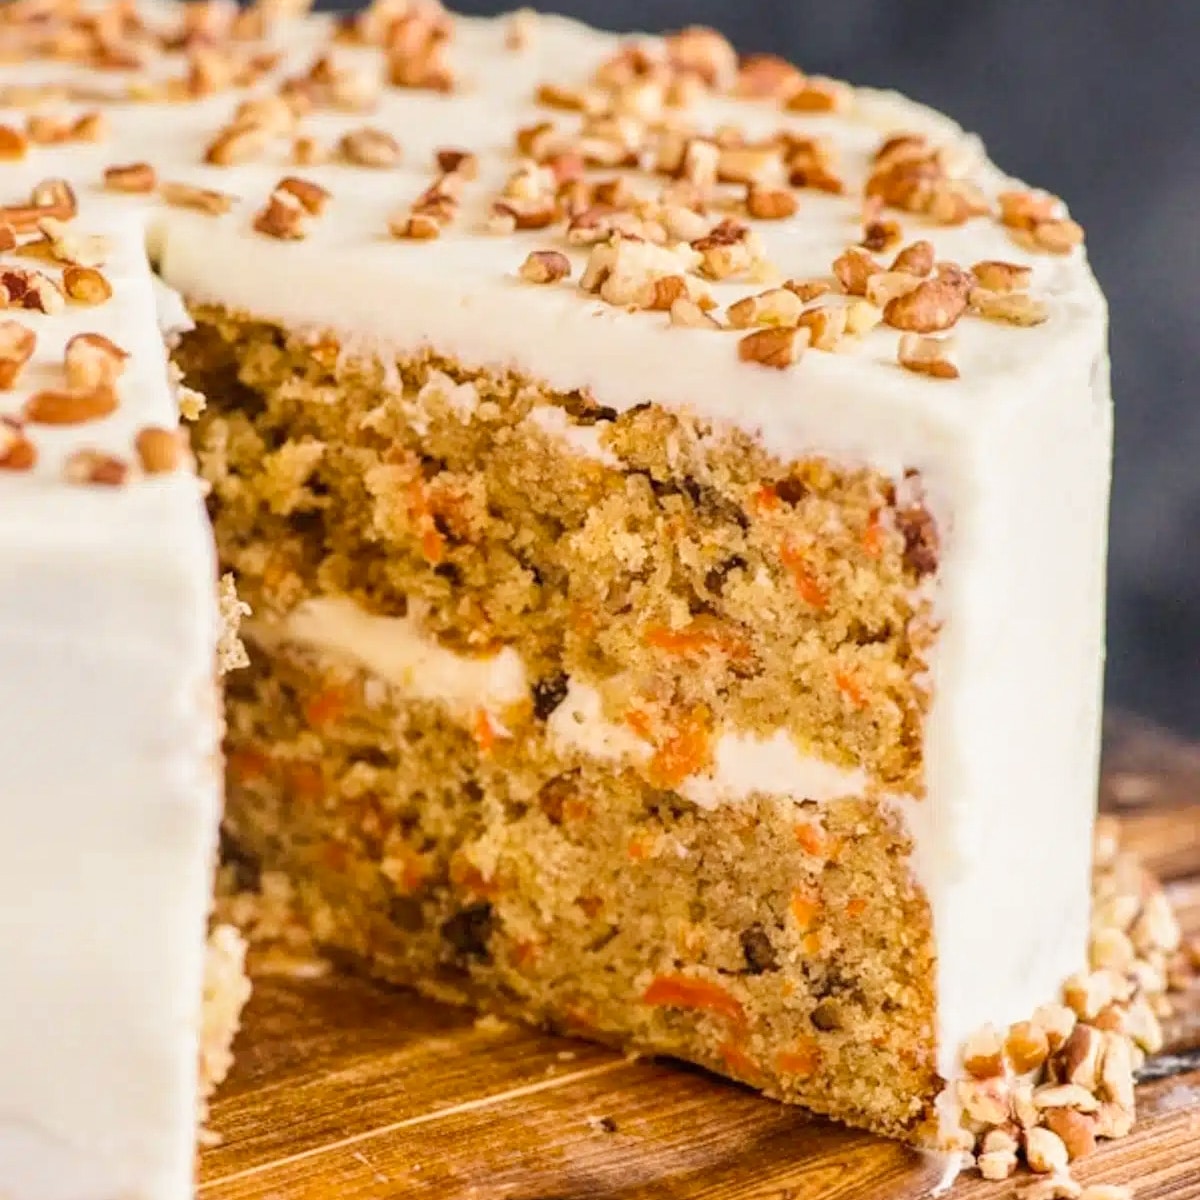 Simple carrot cake recipe - fluffy & delicious